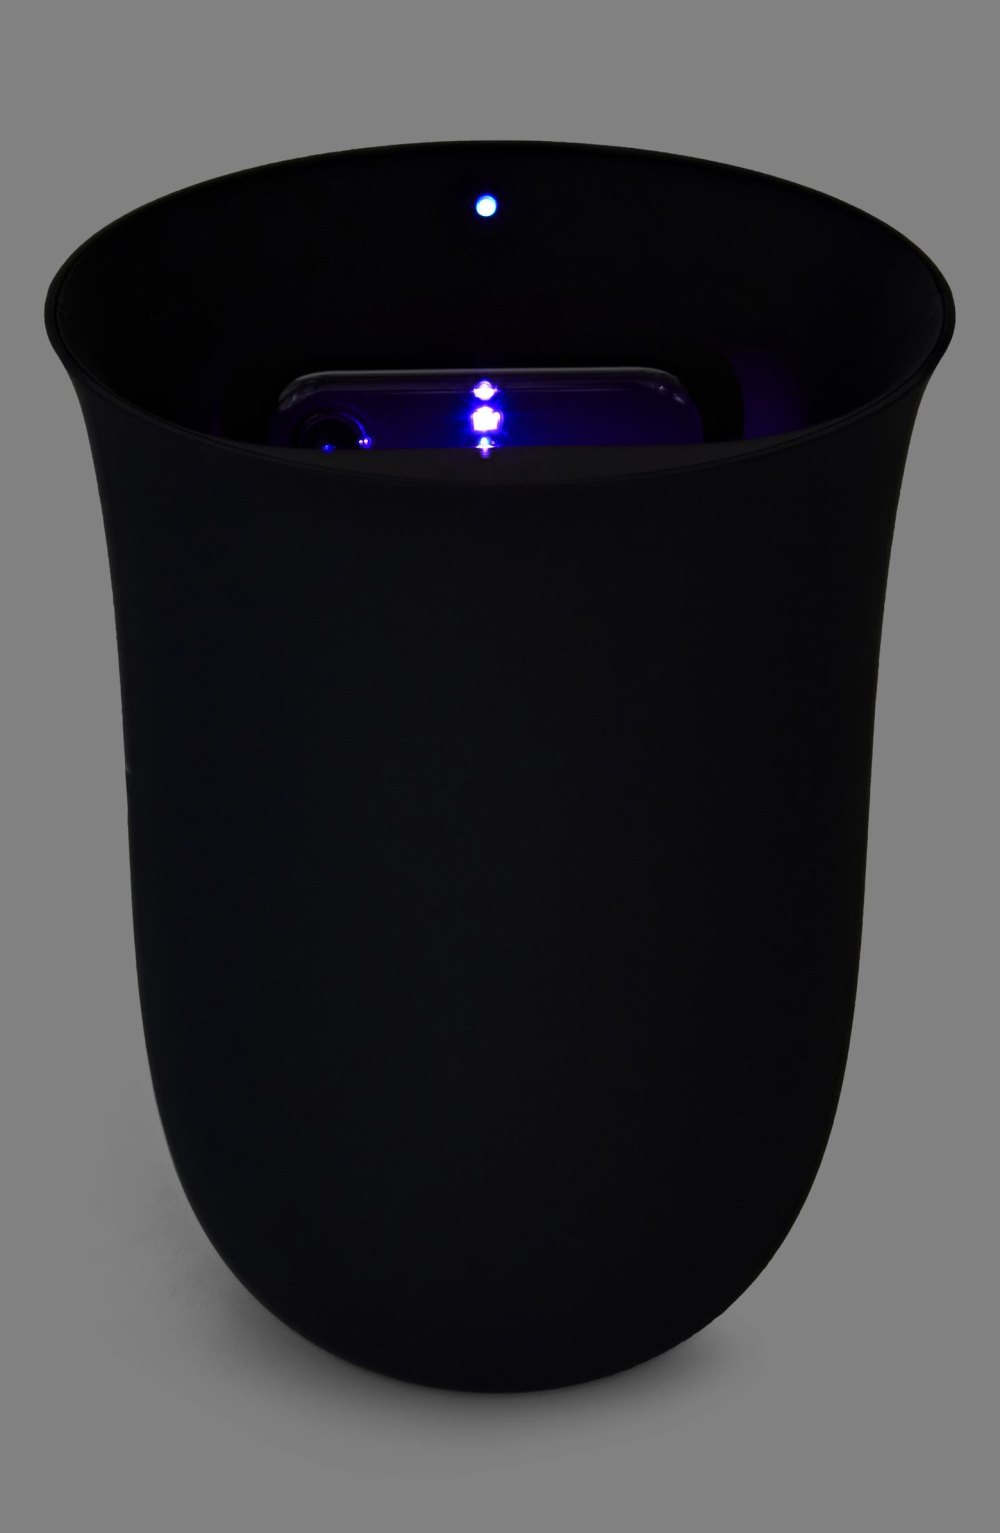 Lexon Oblio Wireless Charger & UV Cleaner